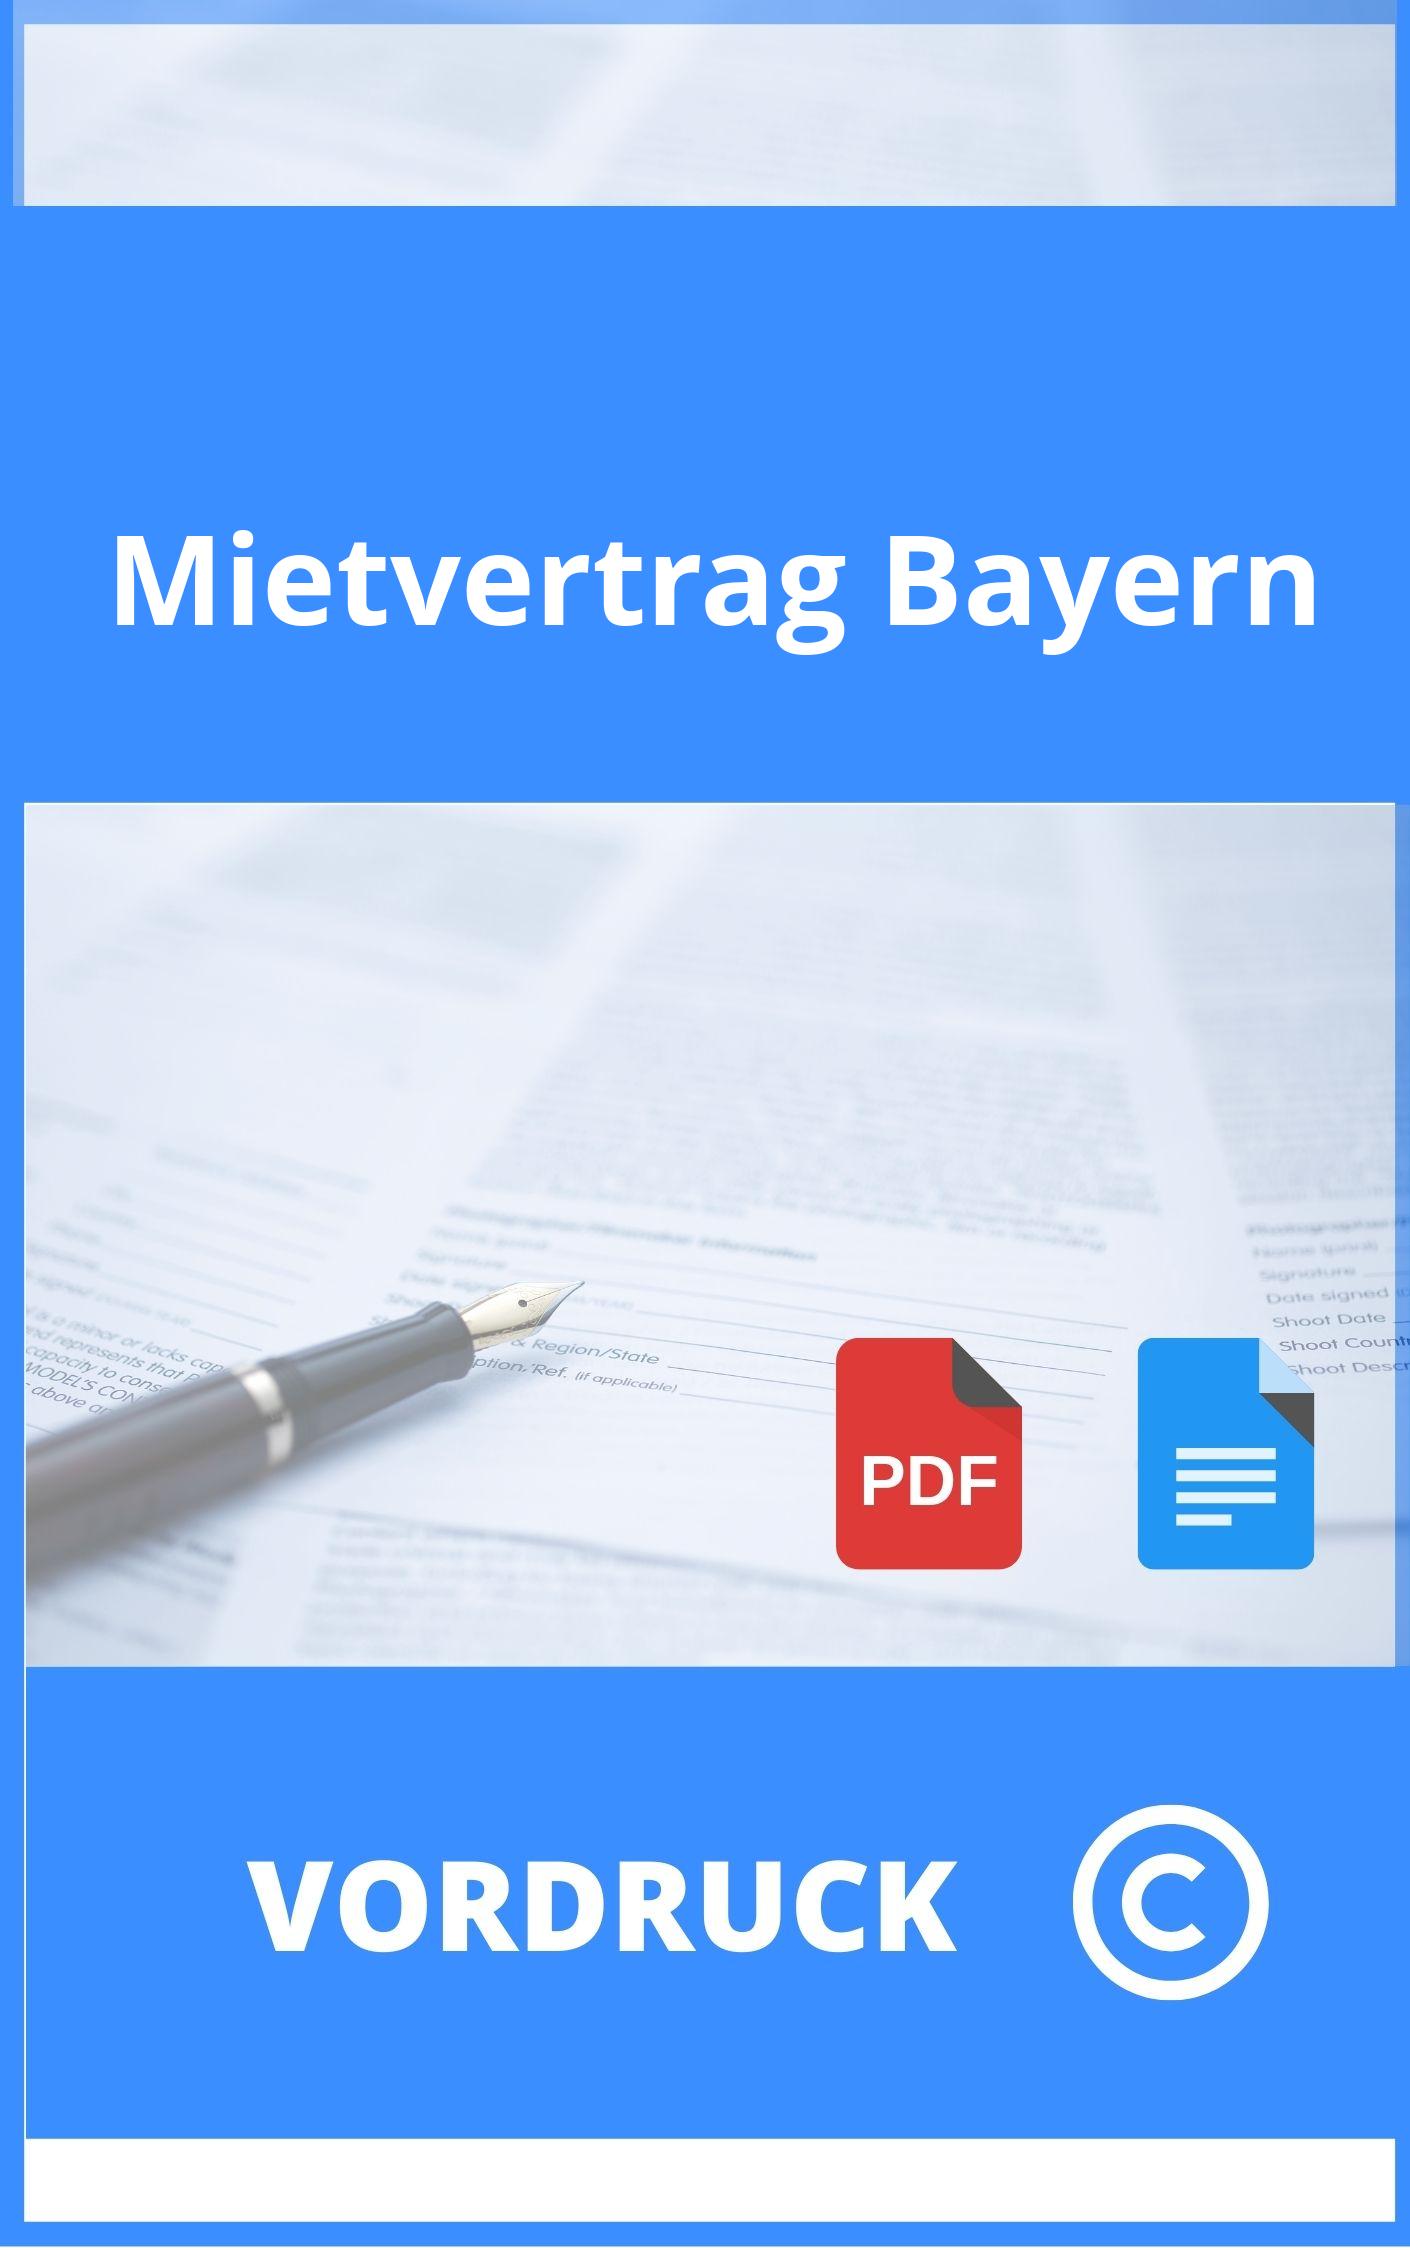 Mietvertrag Bayern Vordruck